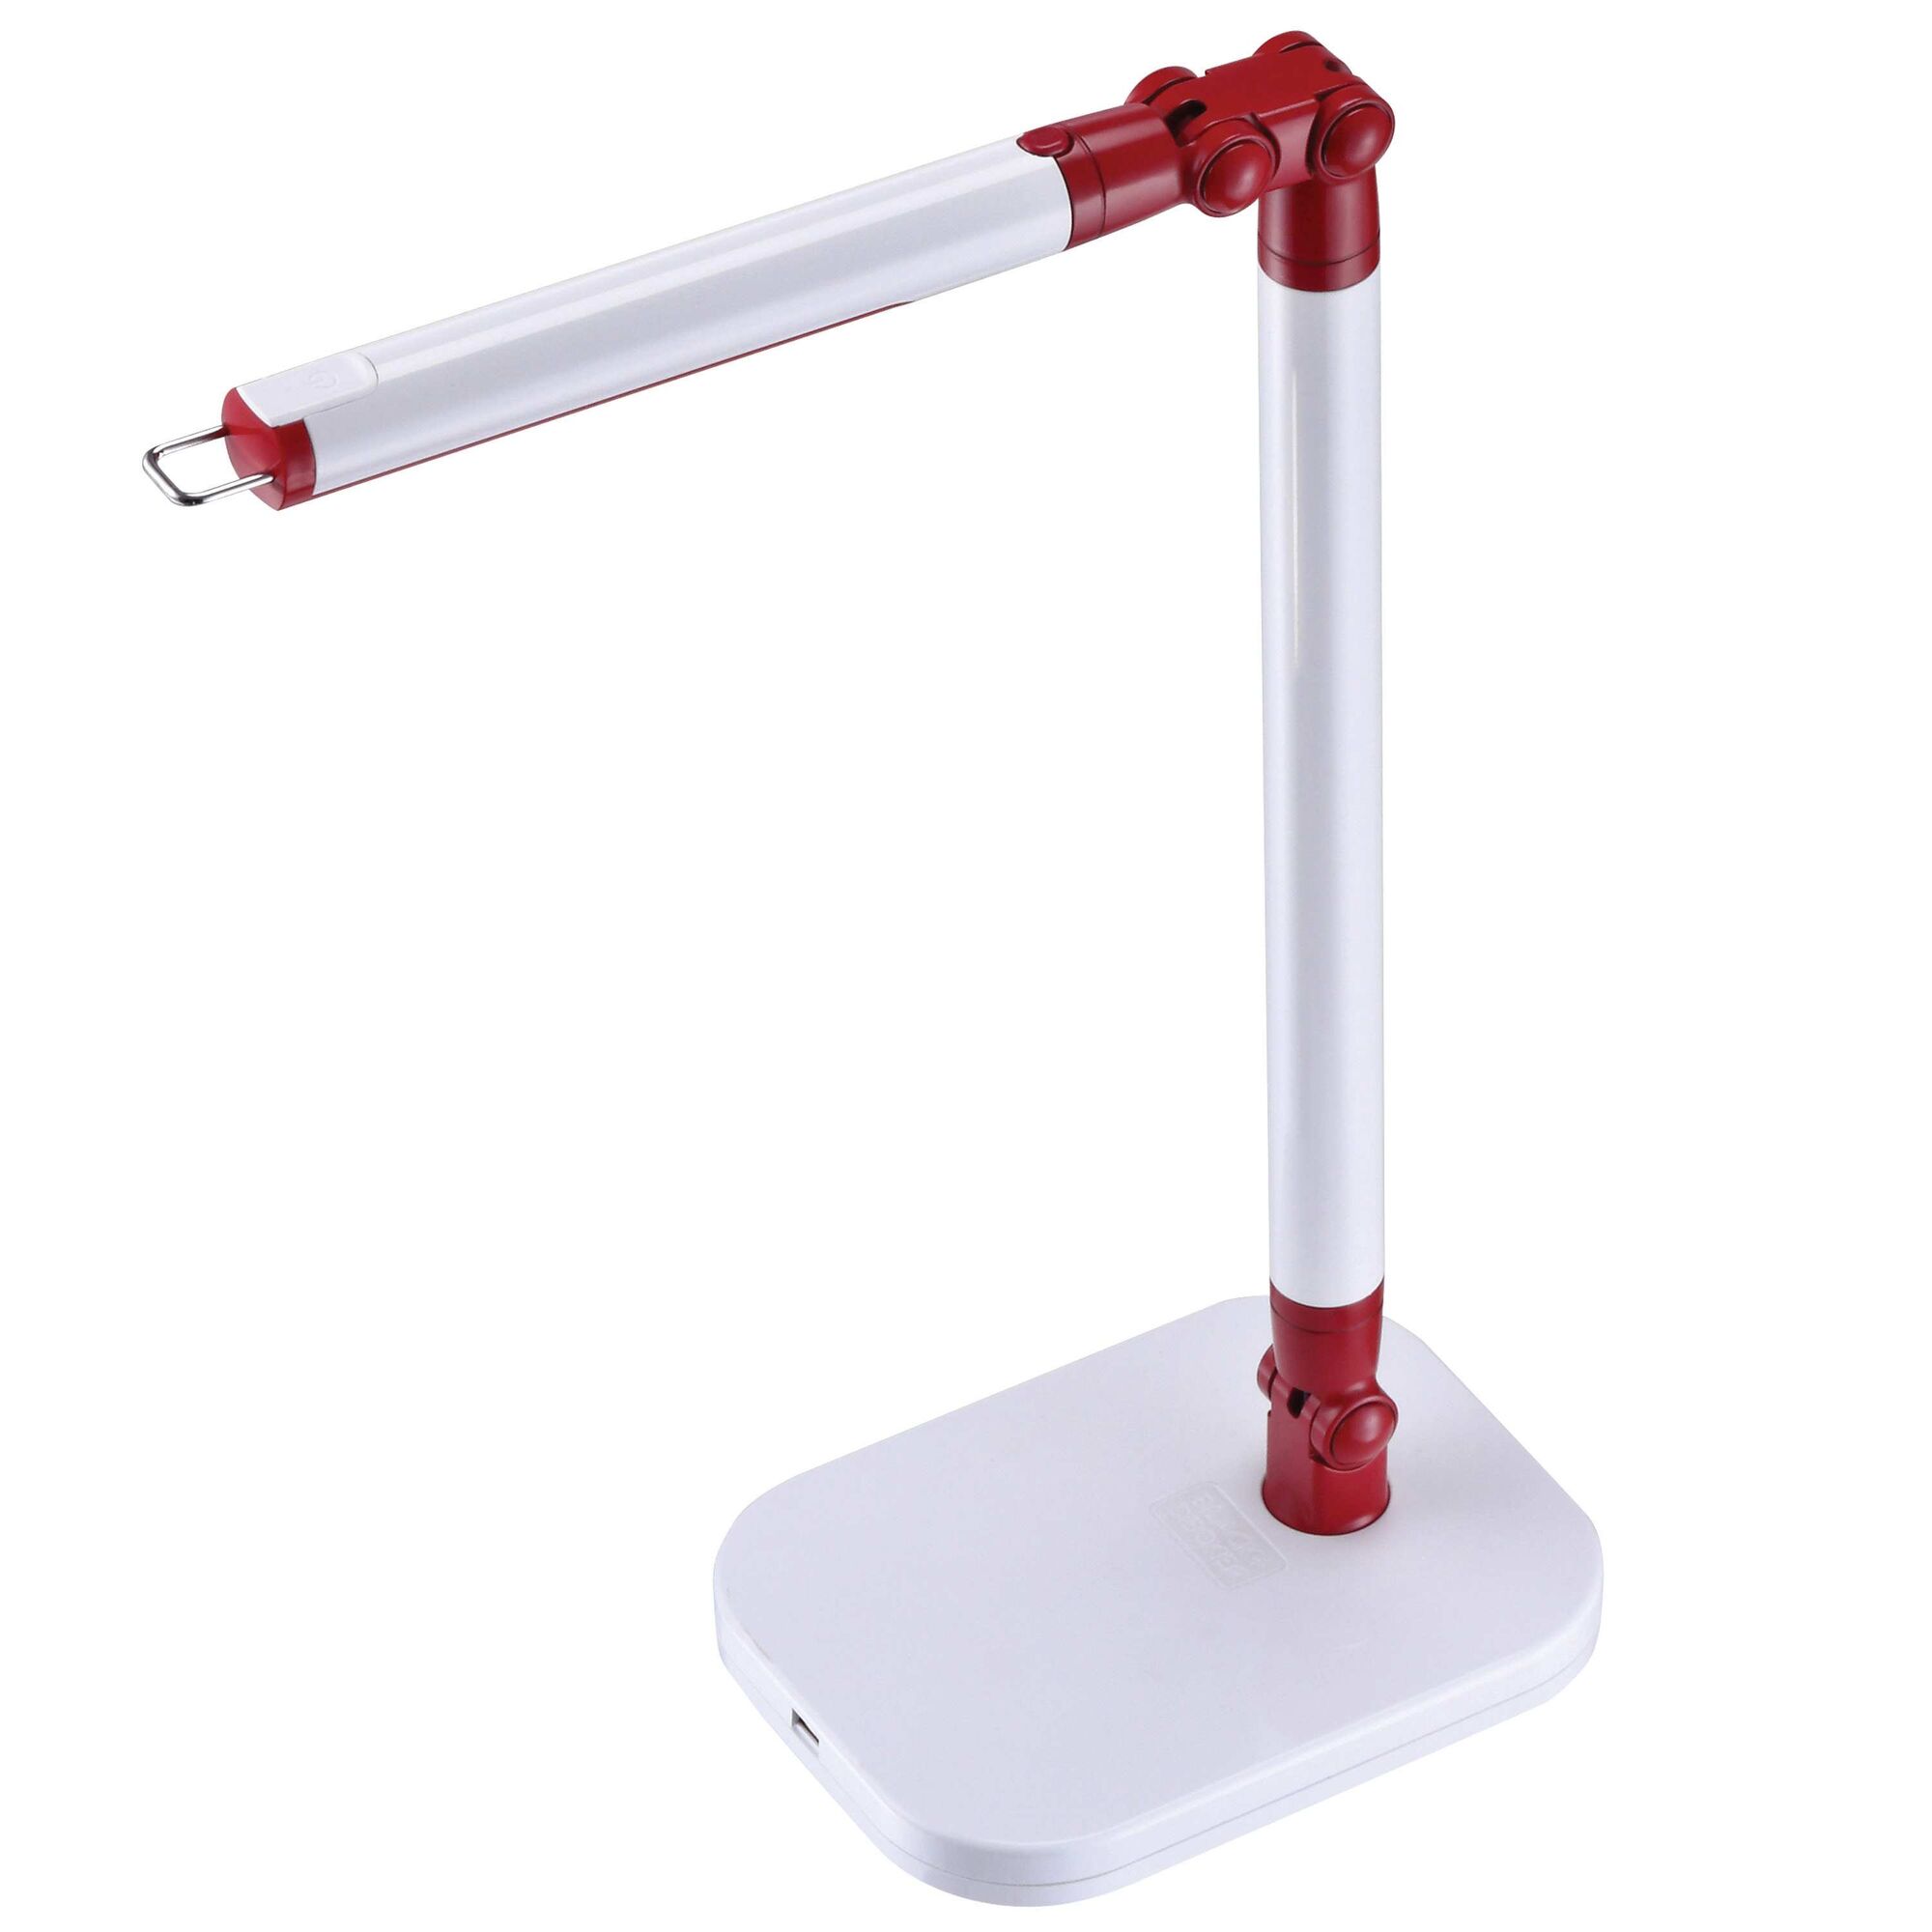 Profile of exalt flash detachable head L E D desk lamp white or red color.